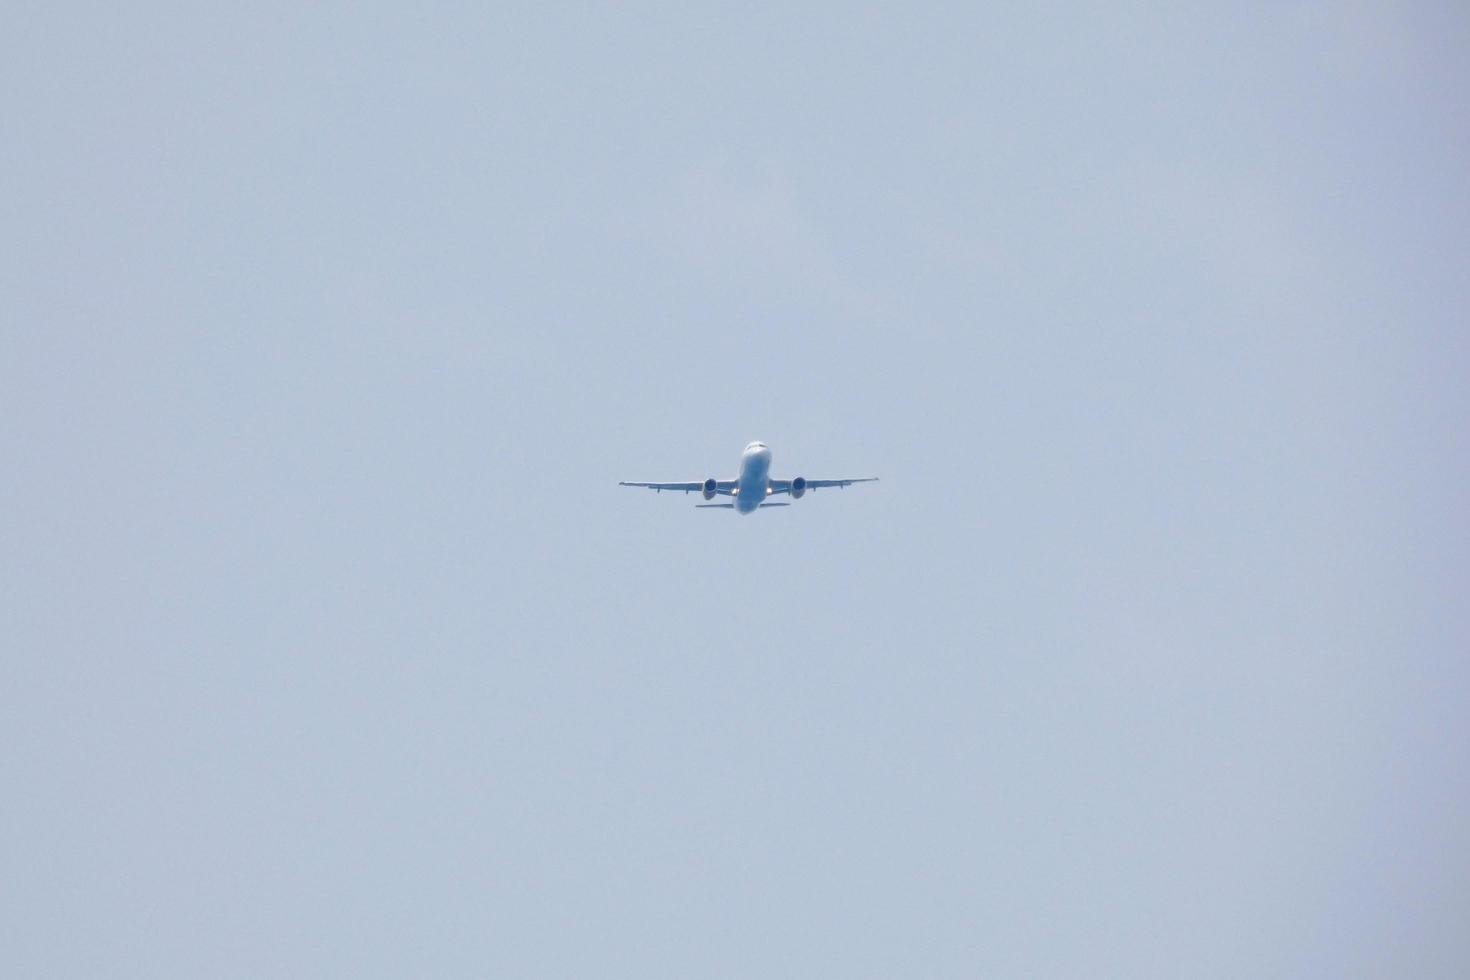 aeronaves comerciais voando sob céu azul e chegando ao aeroporto foto